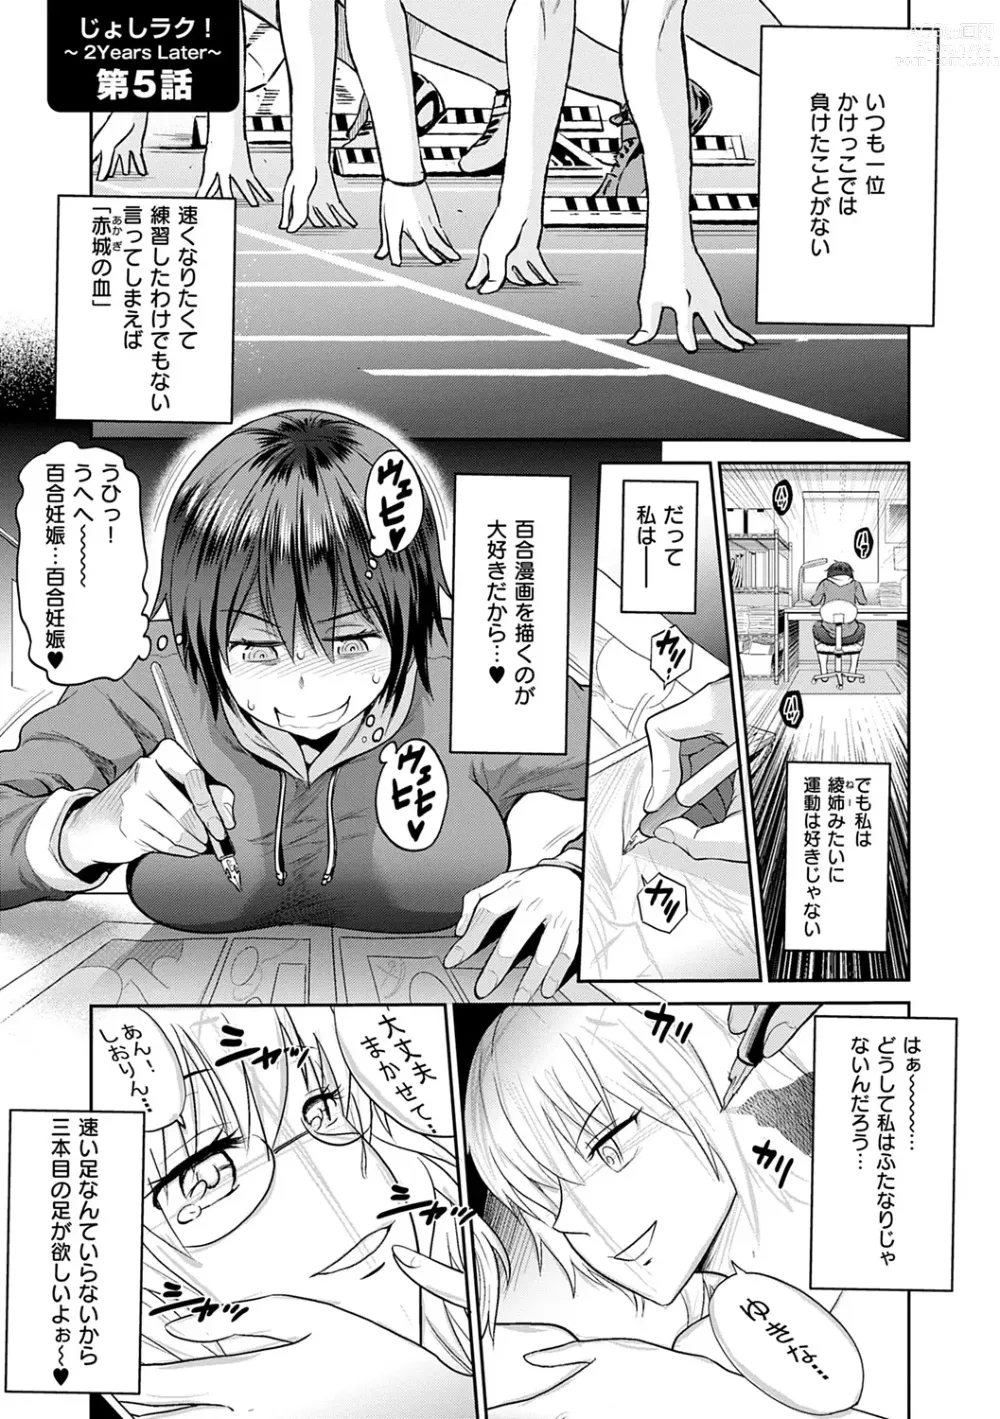 Page 7 of manga Jyoshi Luck! ~2 Years Later~ 2